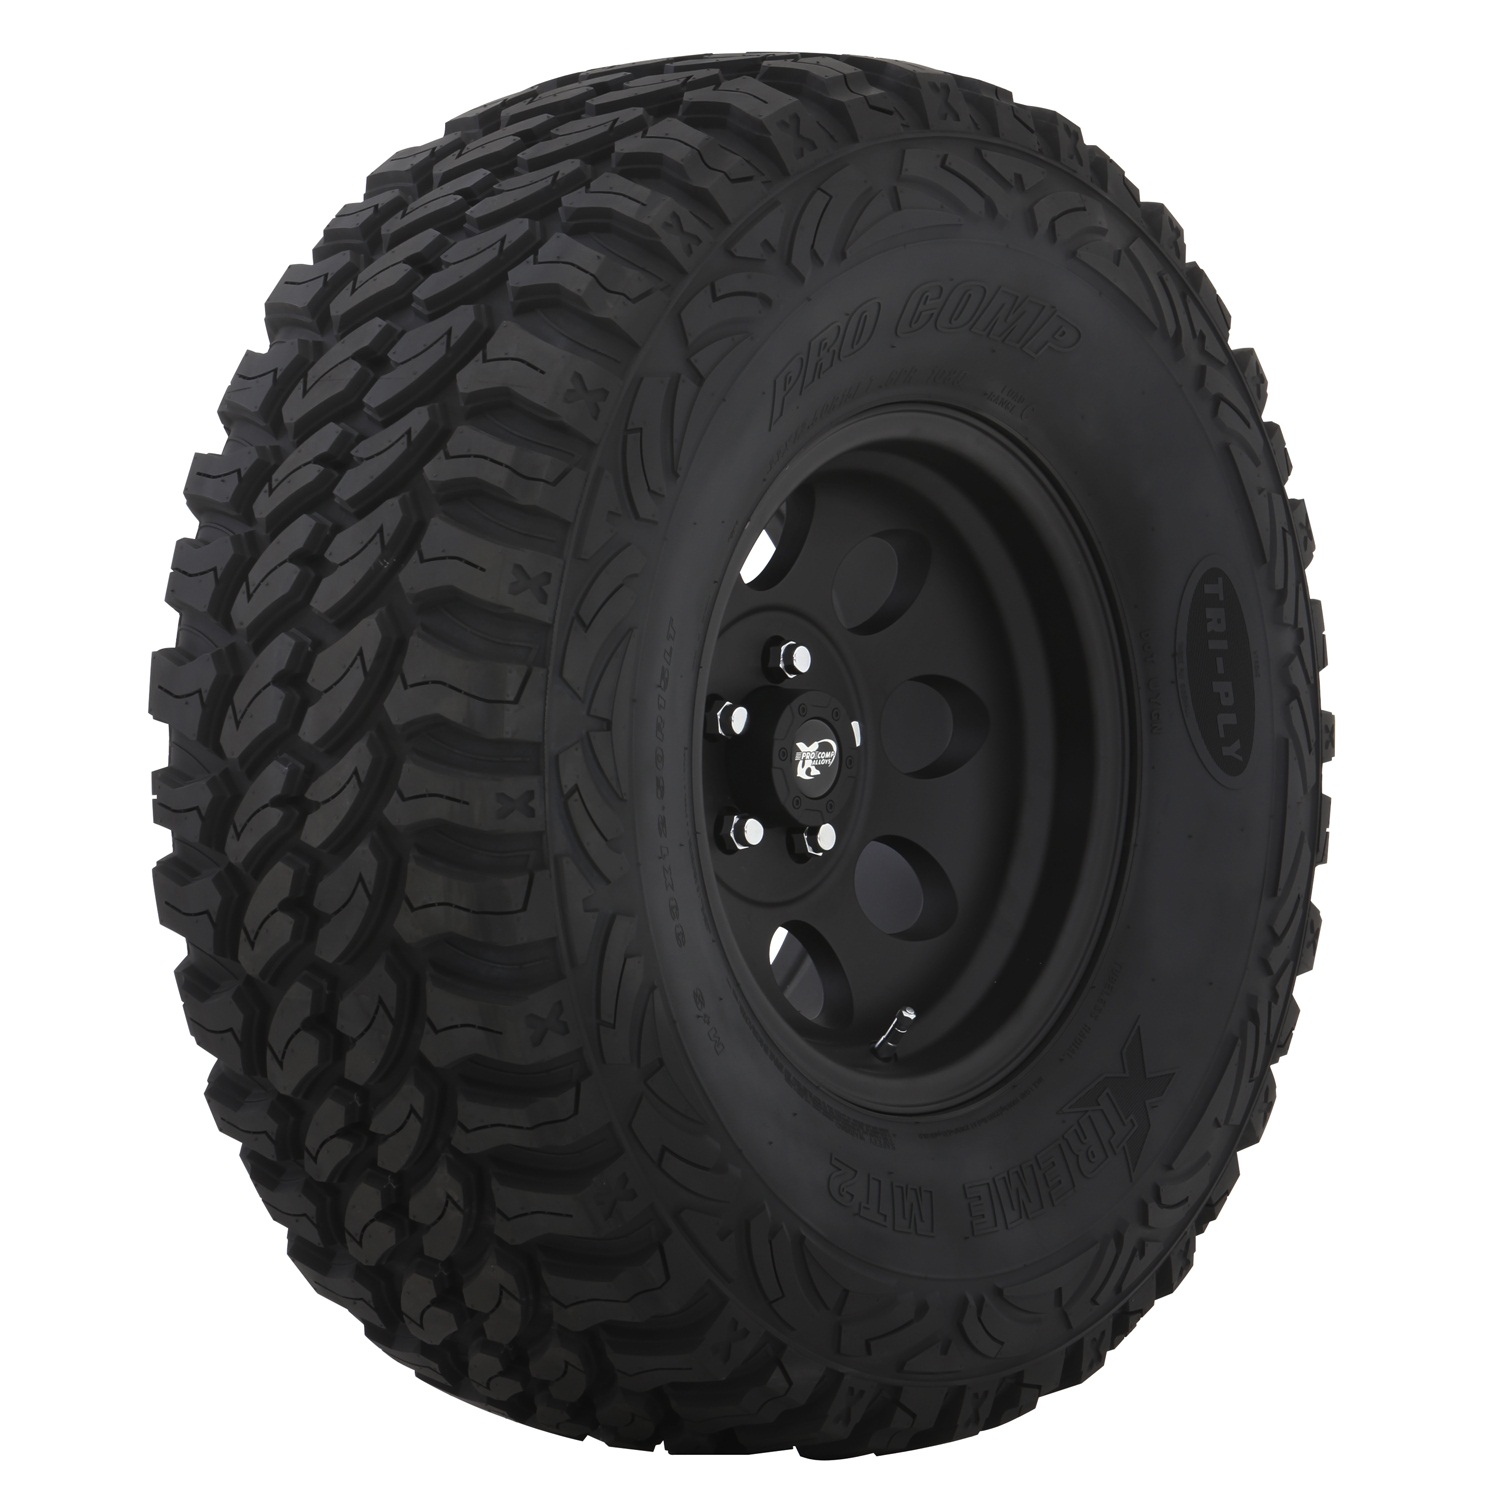 Pro Comp Tires Pro Comp Tires 760265 Pro Comp Xtreme Mud Terrain 2; Tire